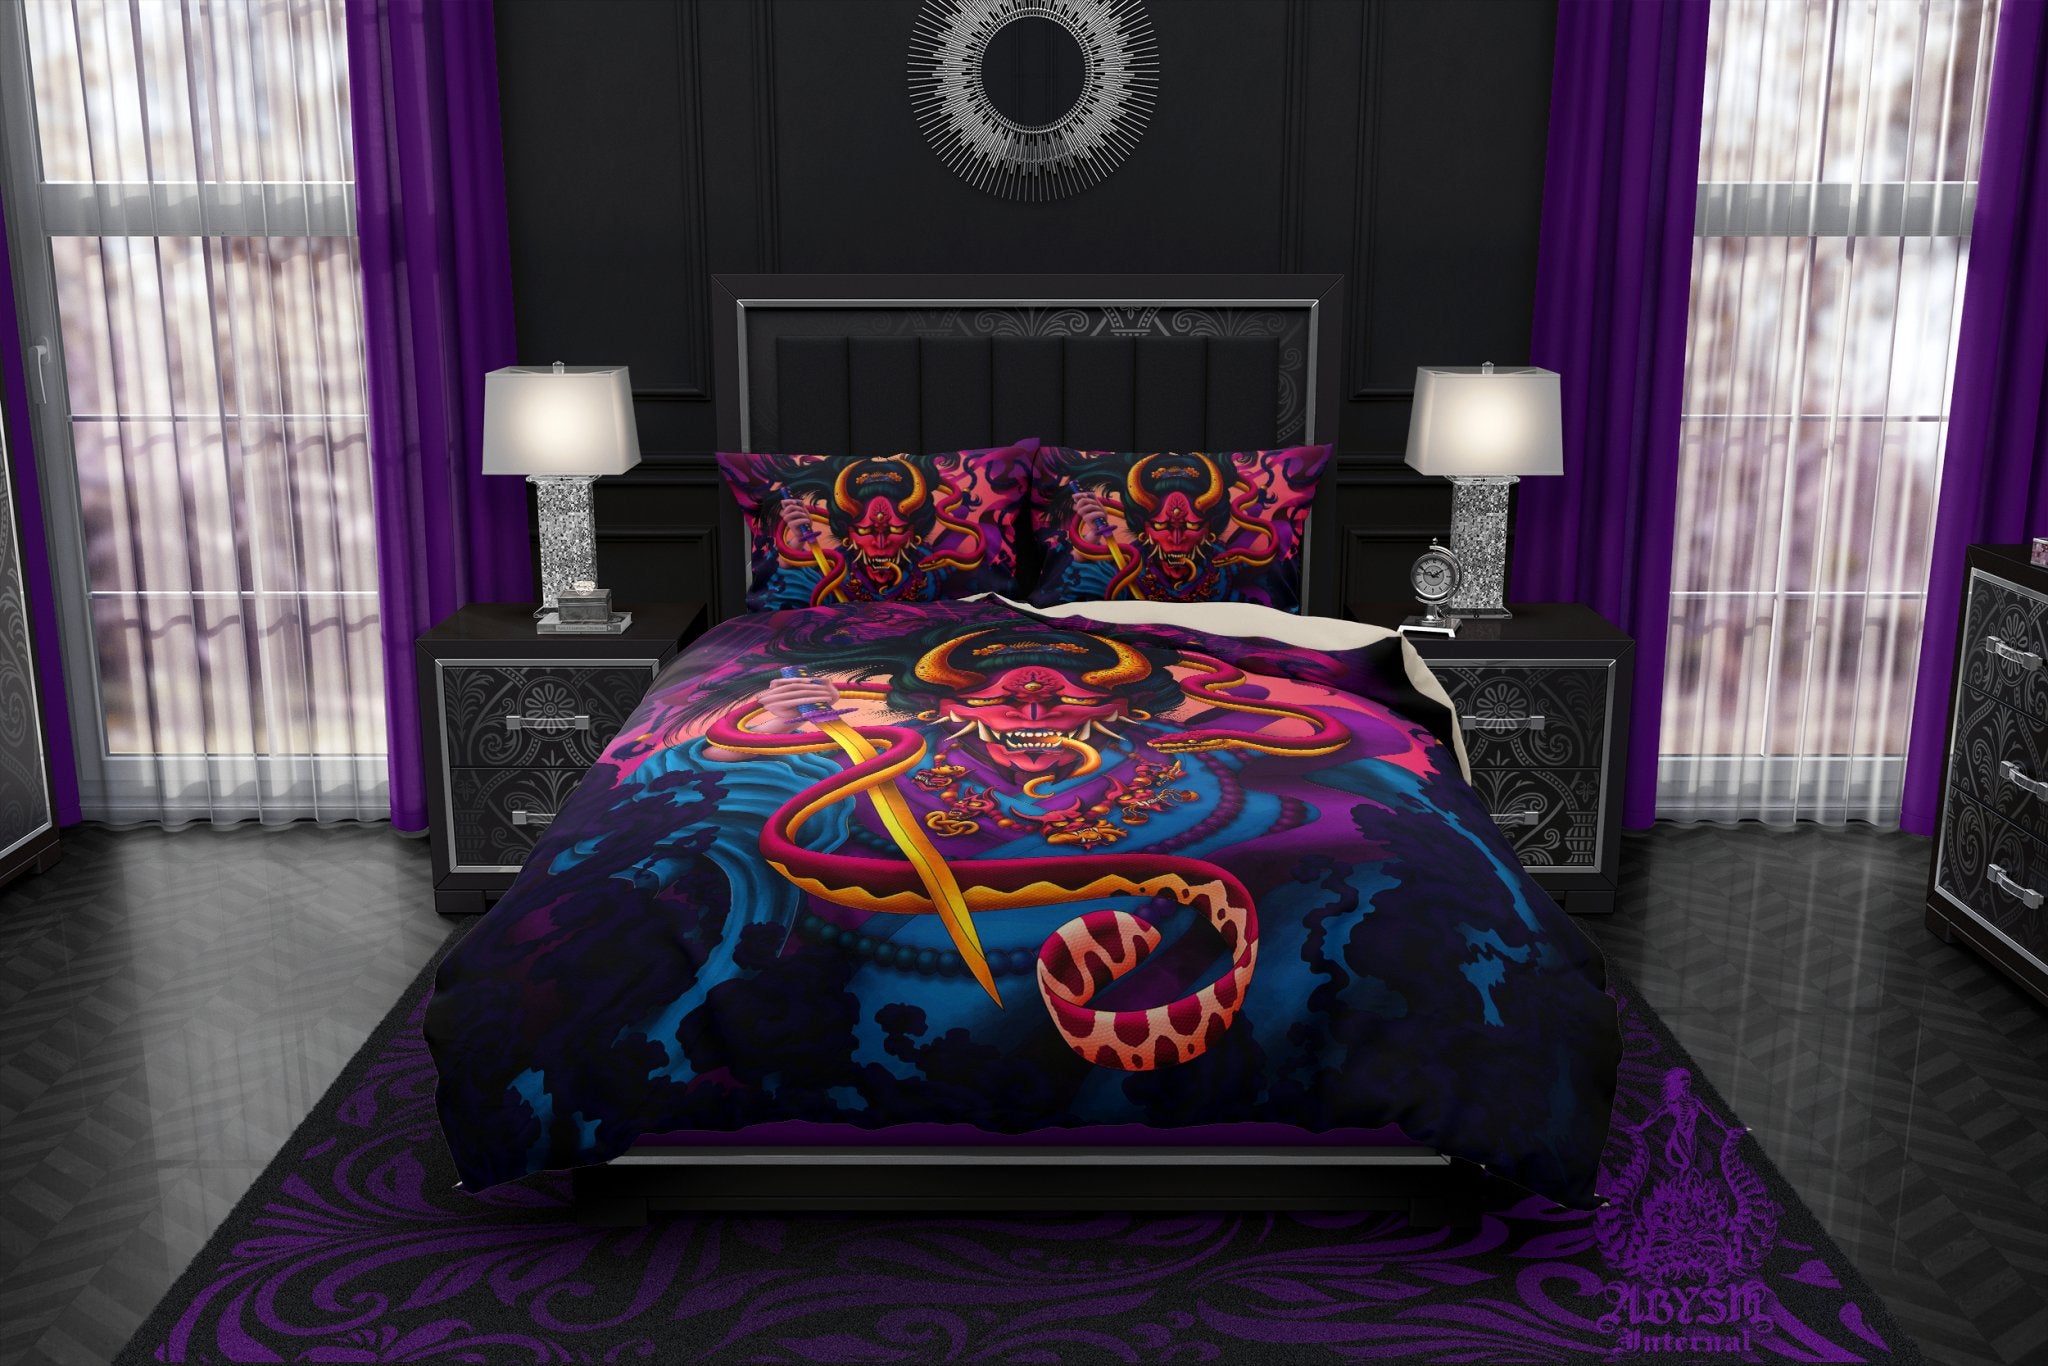 Psychedelic Bedding Set, Comforter or Duvet, Vaporwave Japanese Demon Bed Cover, Anime Bedroom Decor, King, Queen & Twin Size - Snake and Hannya - Abysm Internal